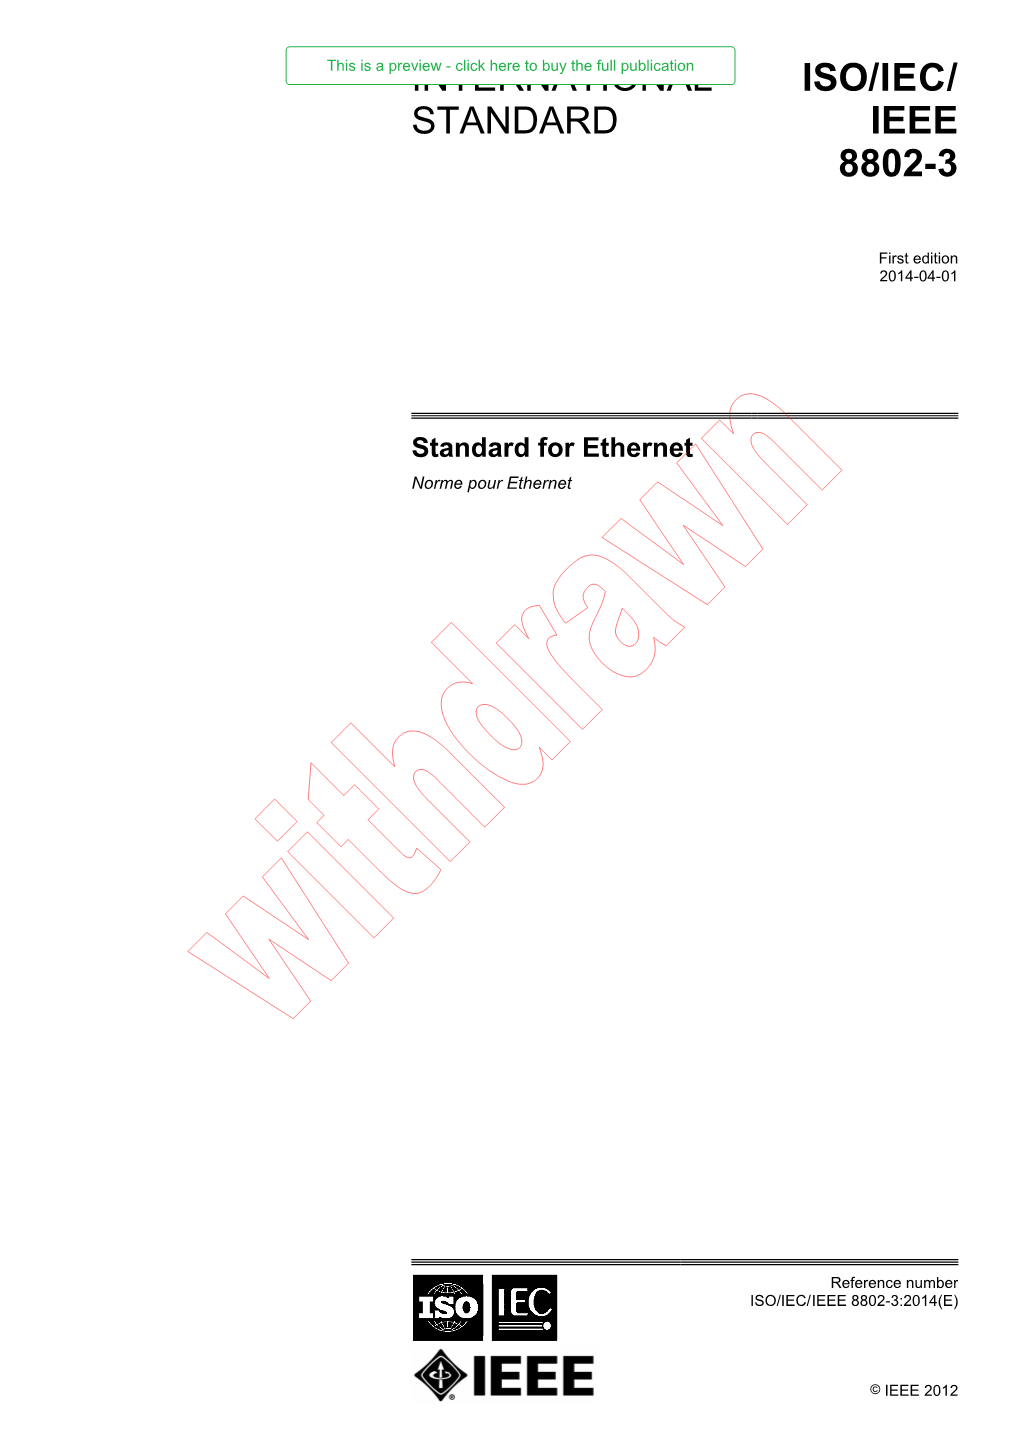 International Standard Iso/Iec/ Ieee 8802-3